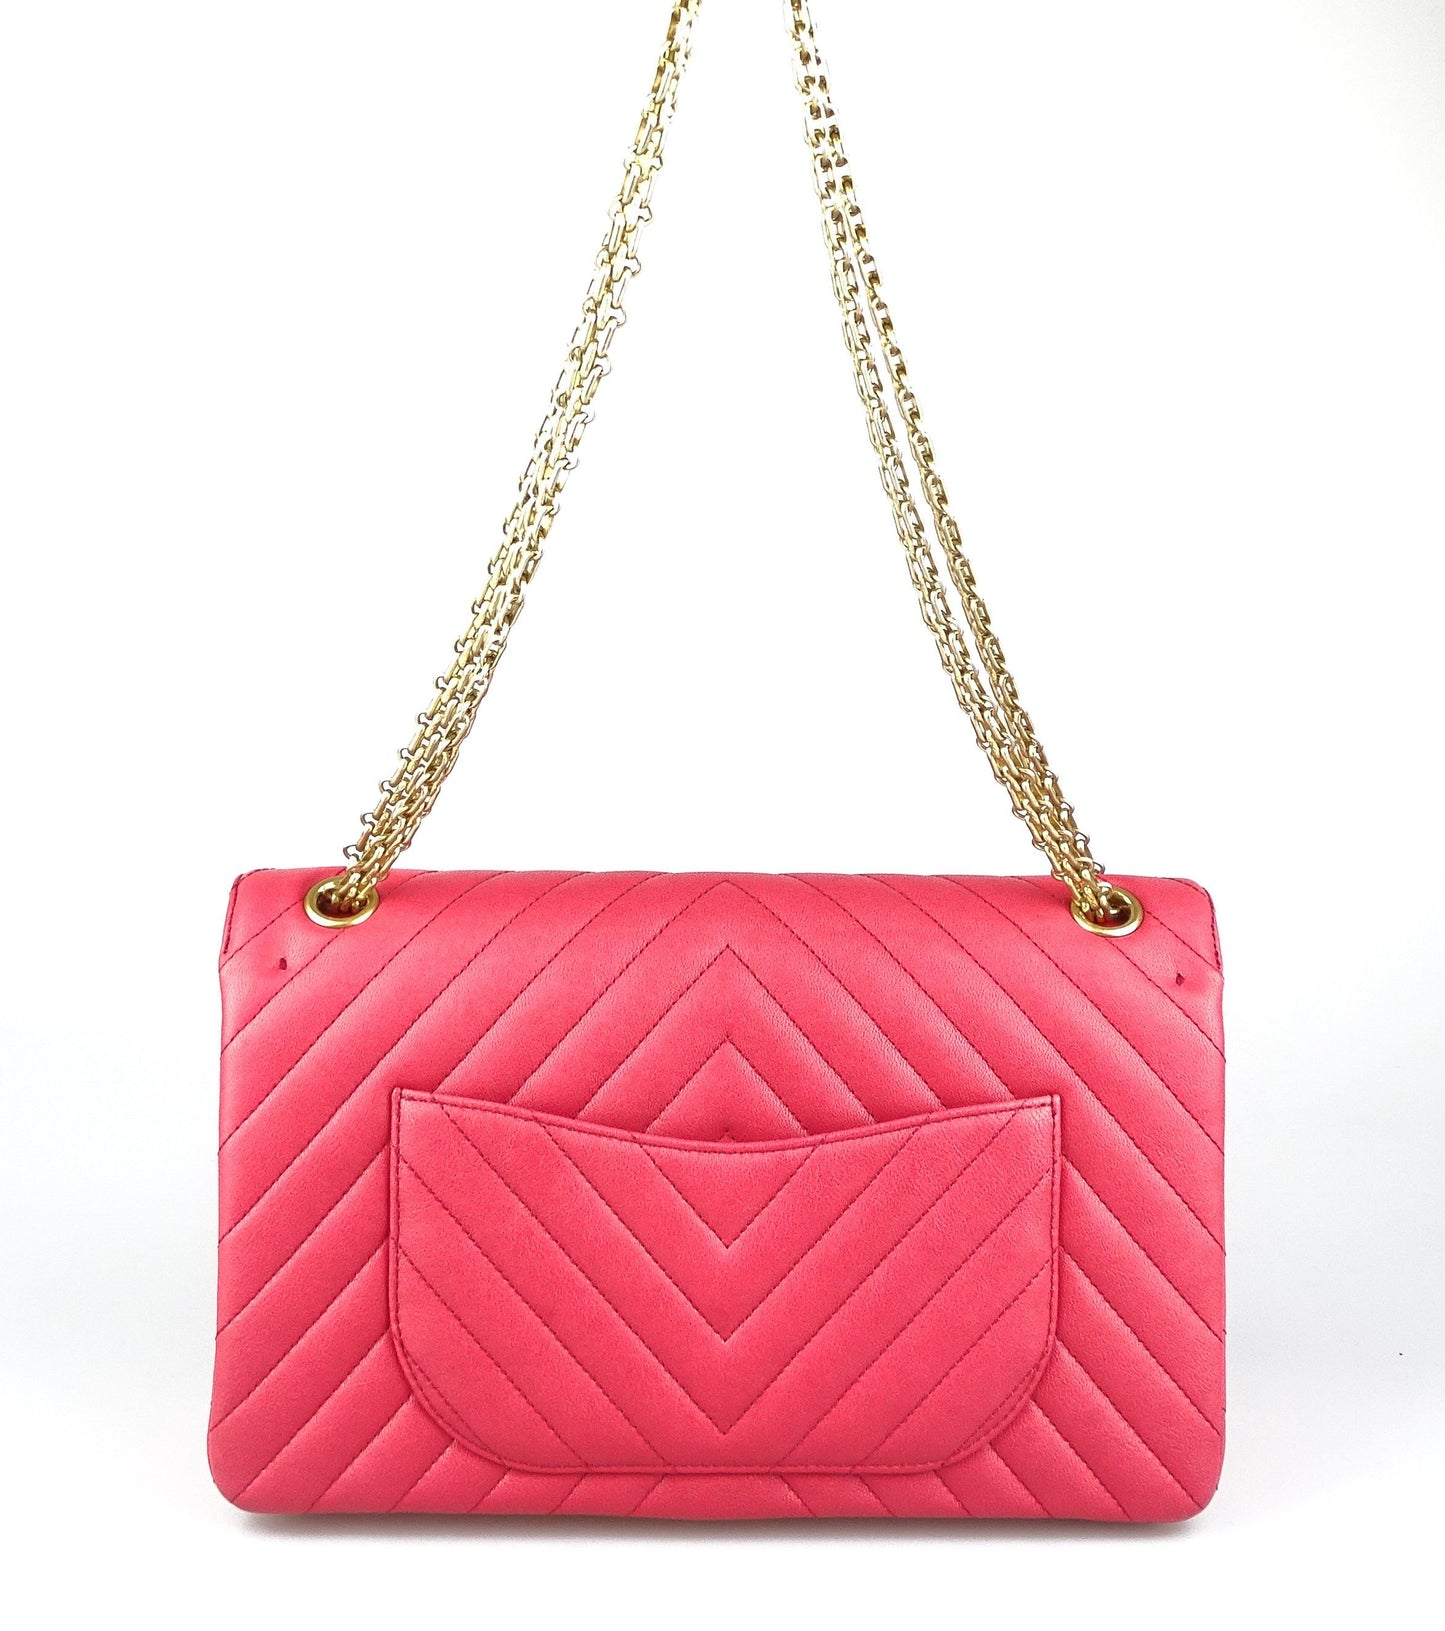 Chanel Chevron Pink Seasonal Reissue 2.55 (Size 226) Bags Chanel 